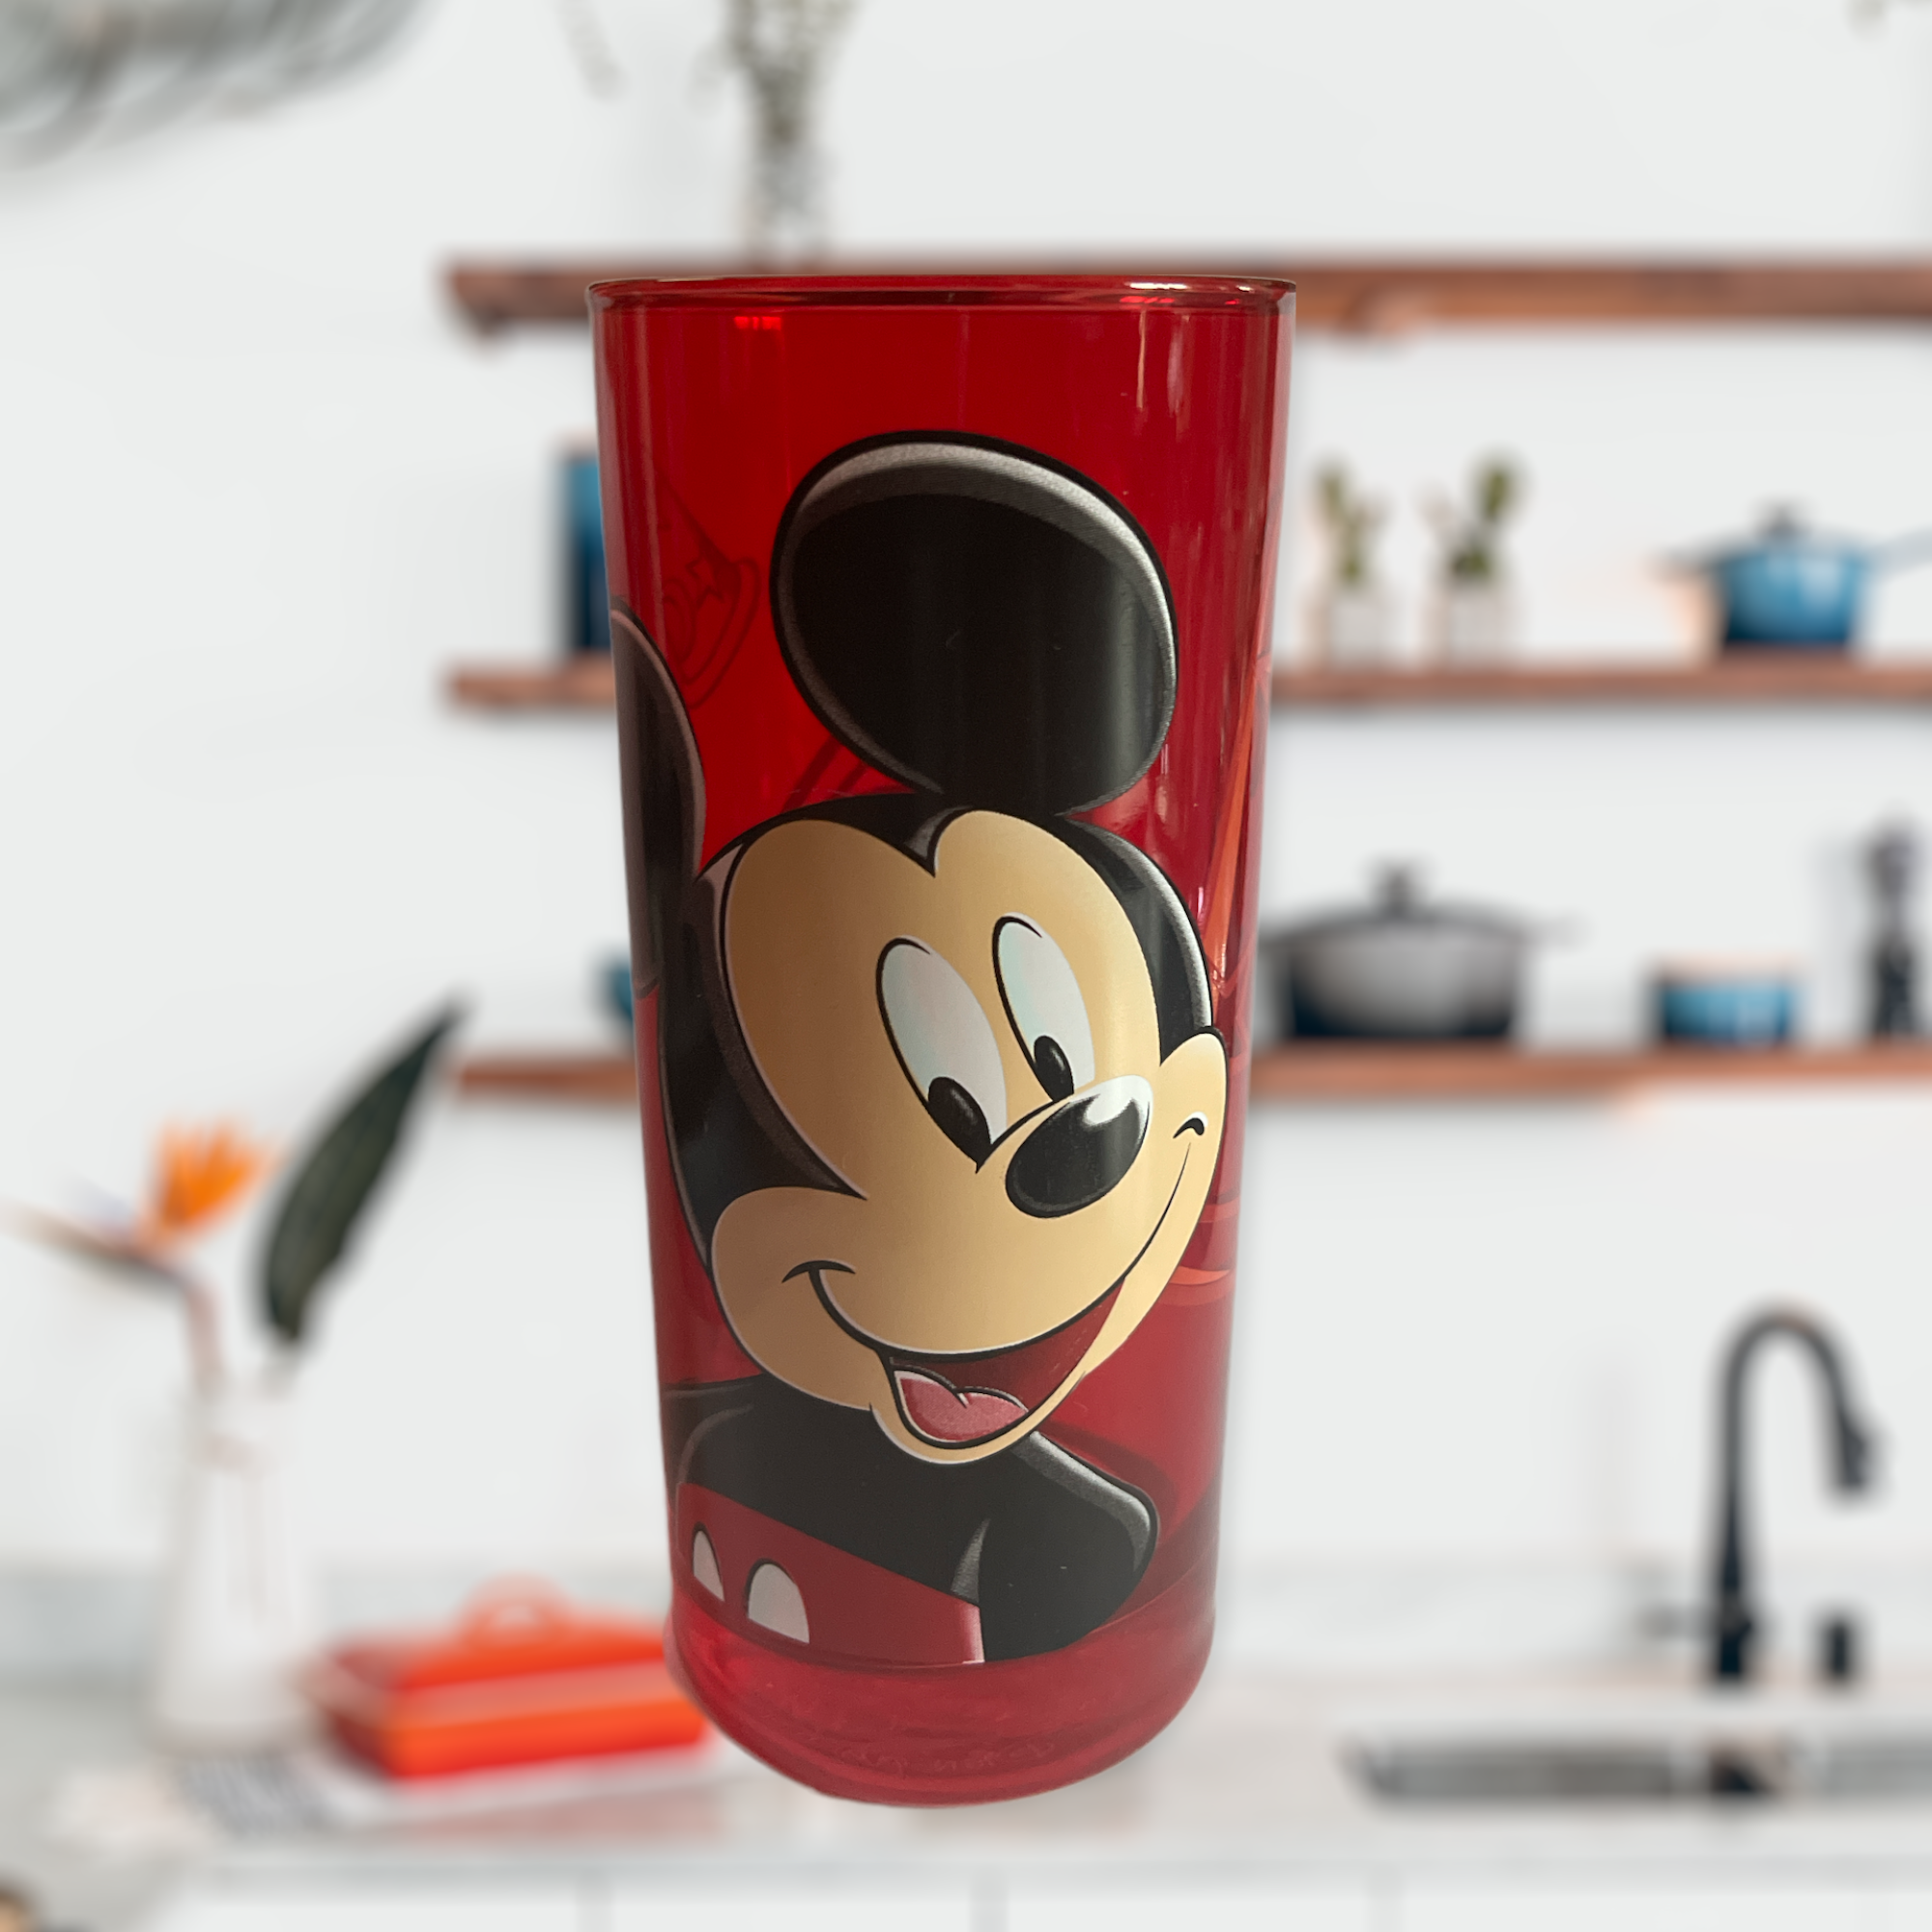 Disney - Mickey Mouse : Verre portrait